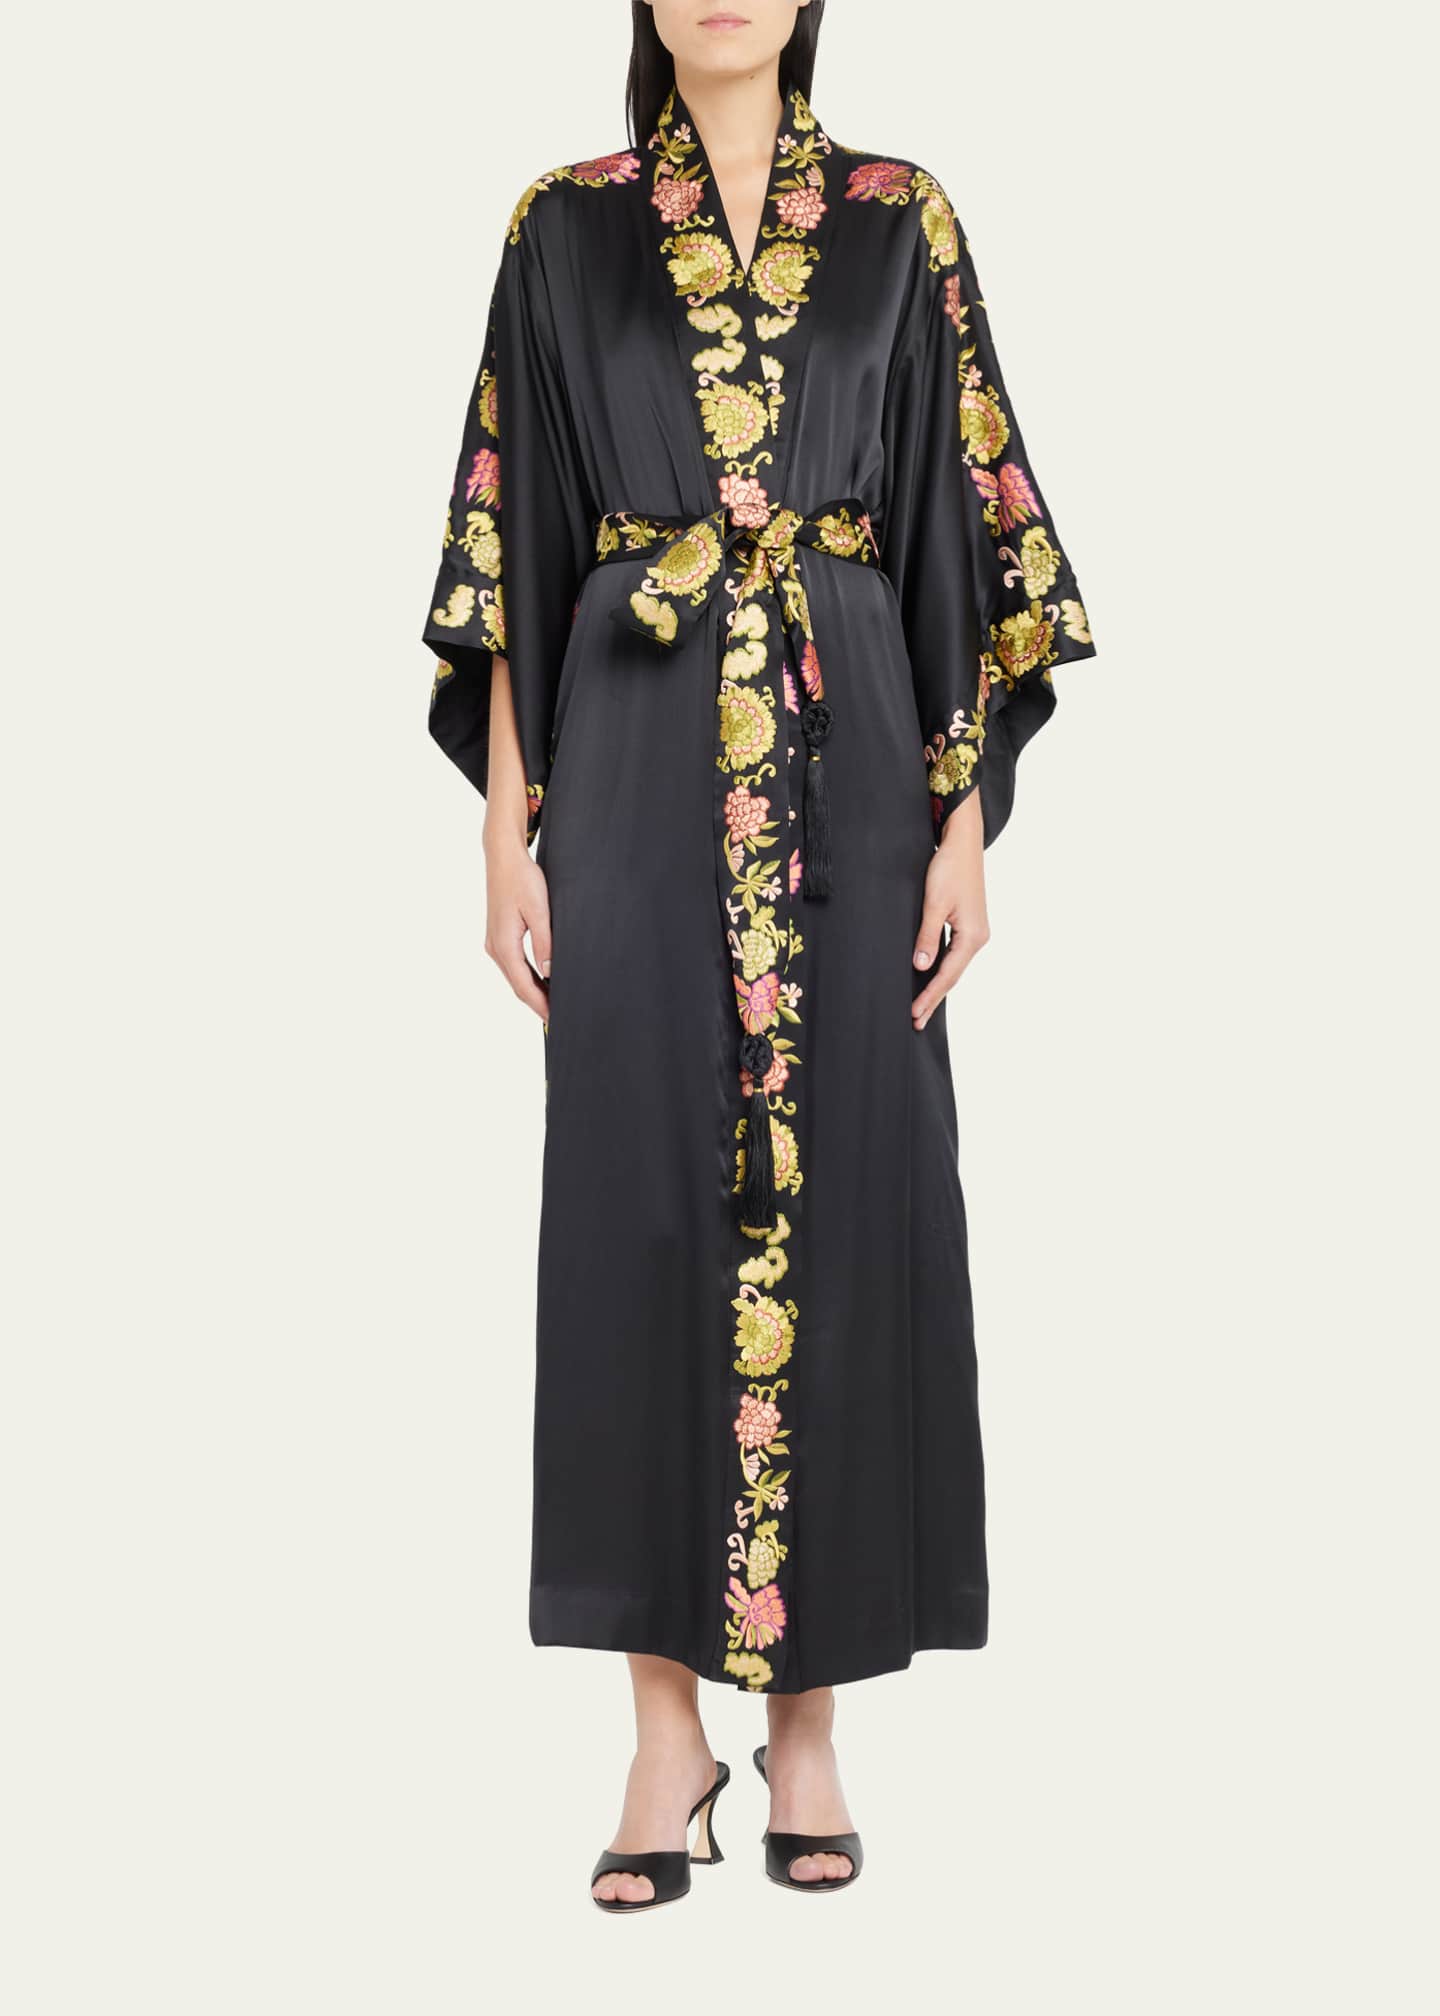 Josie Natori Yasugi Embroidered-Trim Silk Robe - Bergdorf Goodman